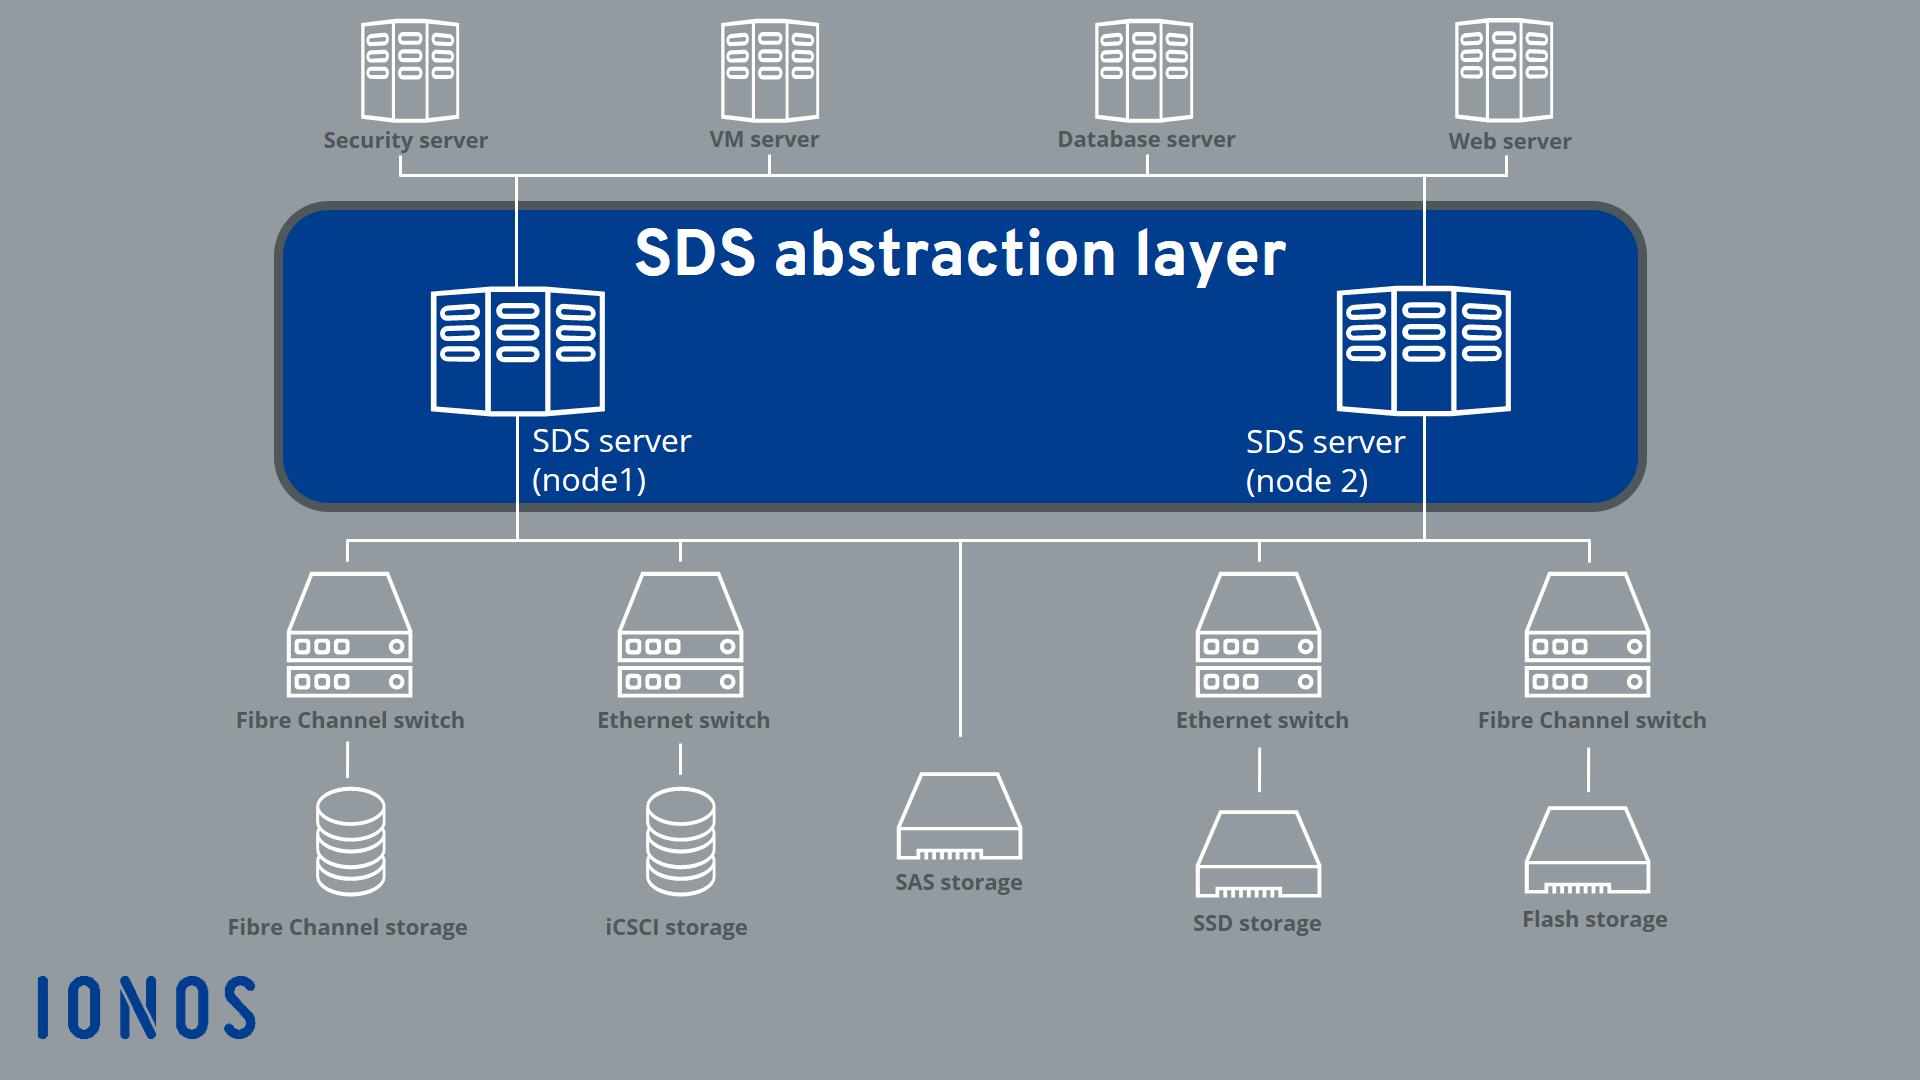 https://www.ionos.com/digitalguide/fileadmin/DigitalGuide/Schaubilder/sds-abstraction-layer.png